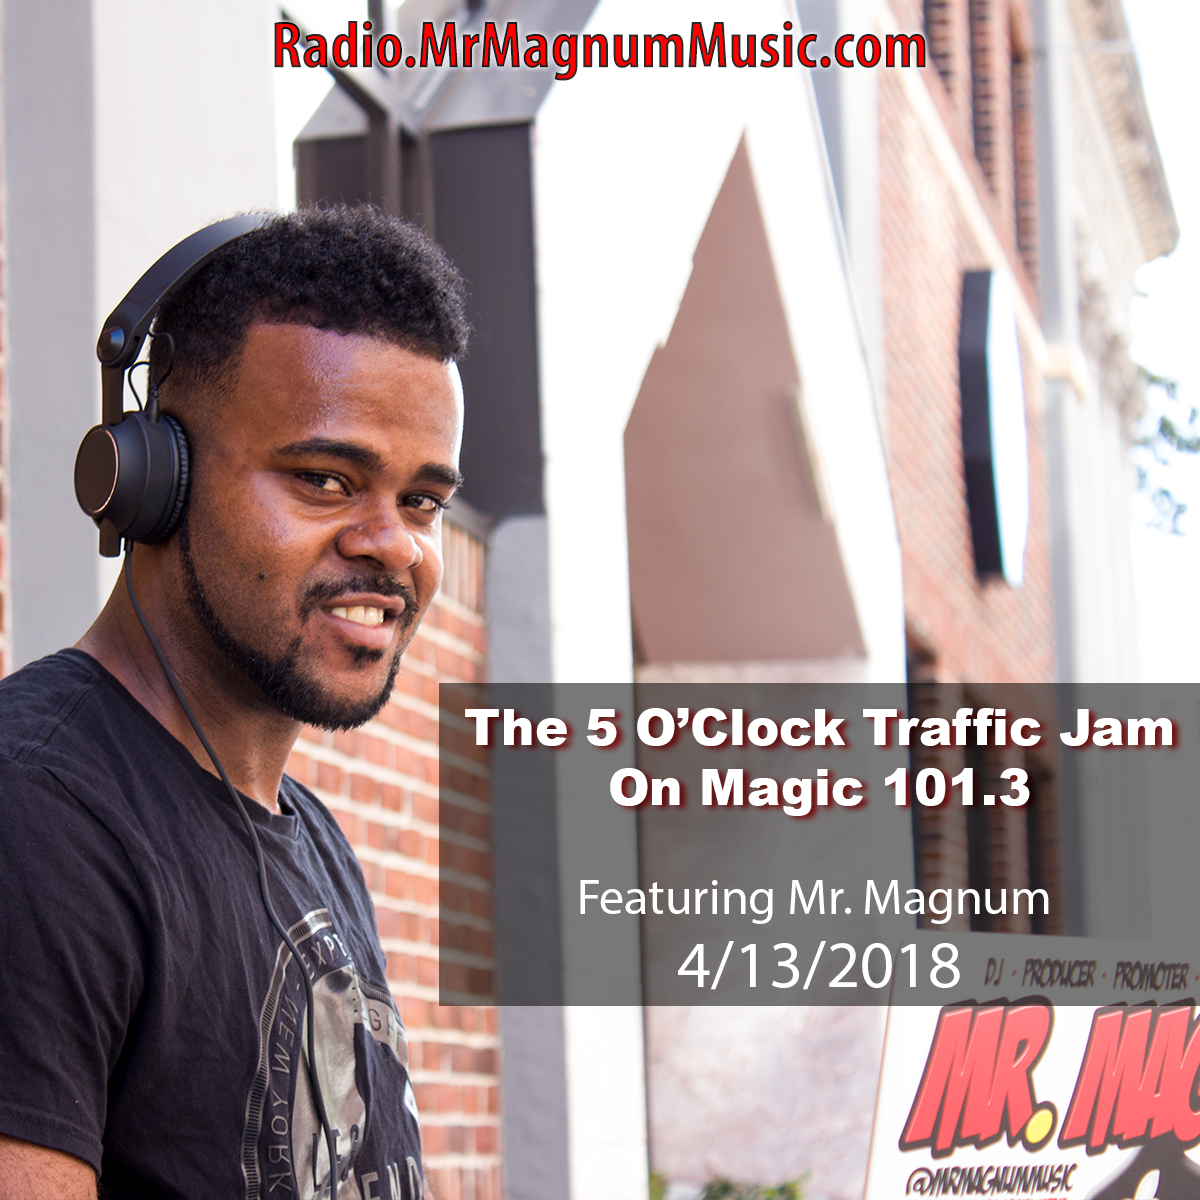 The 5 O'Clock Traffic Jam 20180413 featuring Gainesville's #1 DJ, Mr. Magnum on Magic 101.3